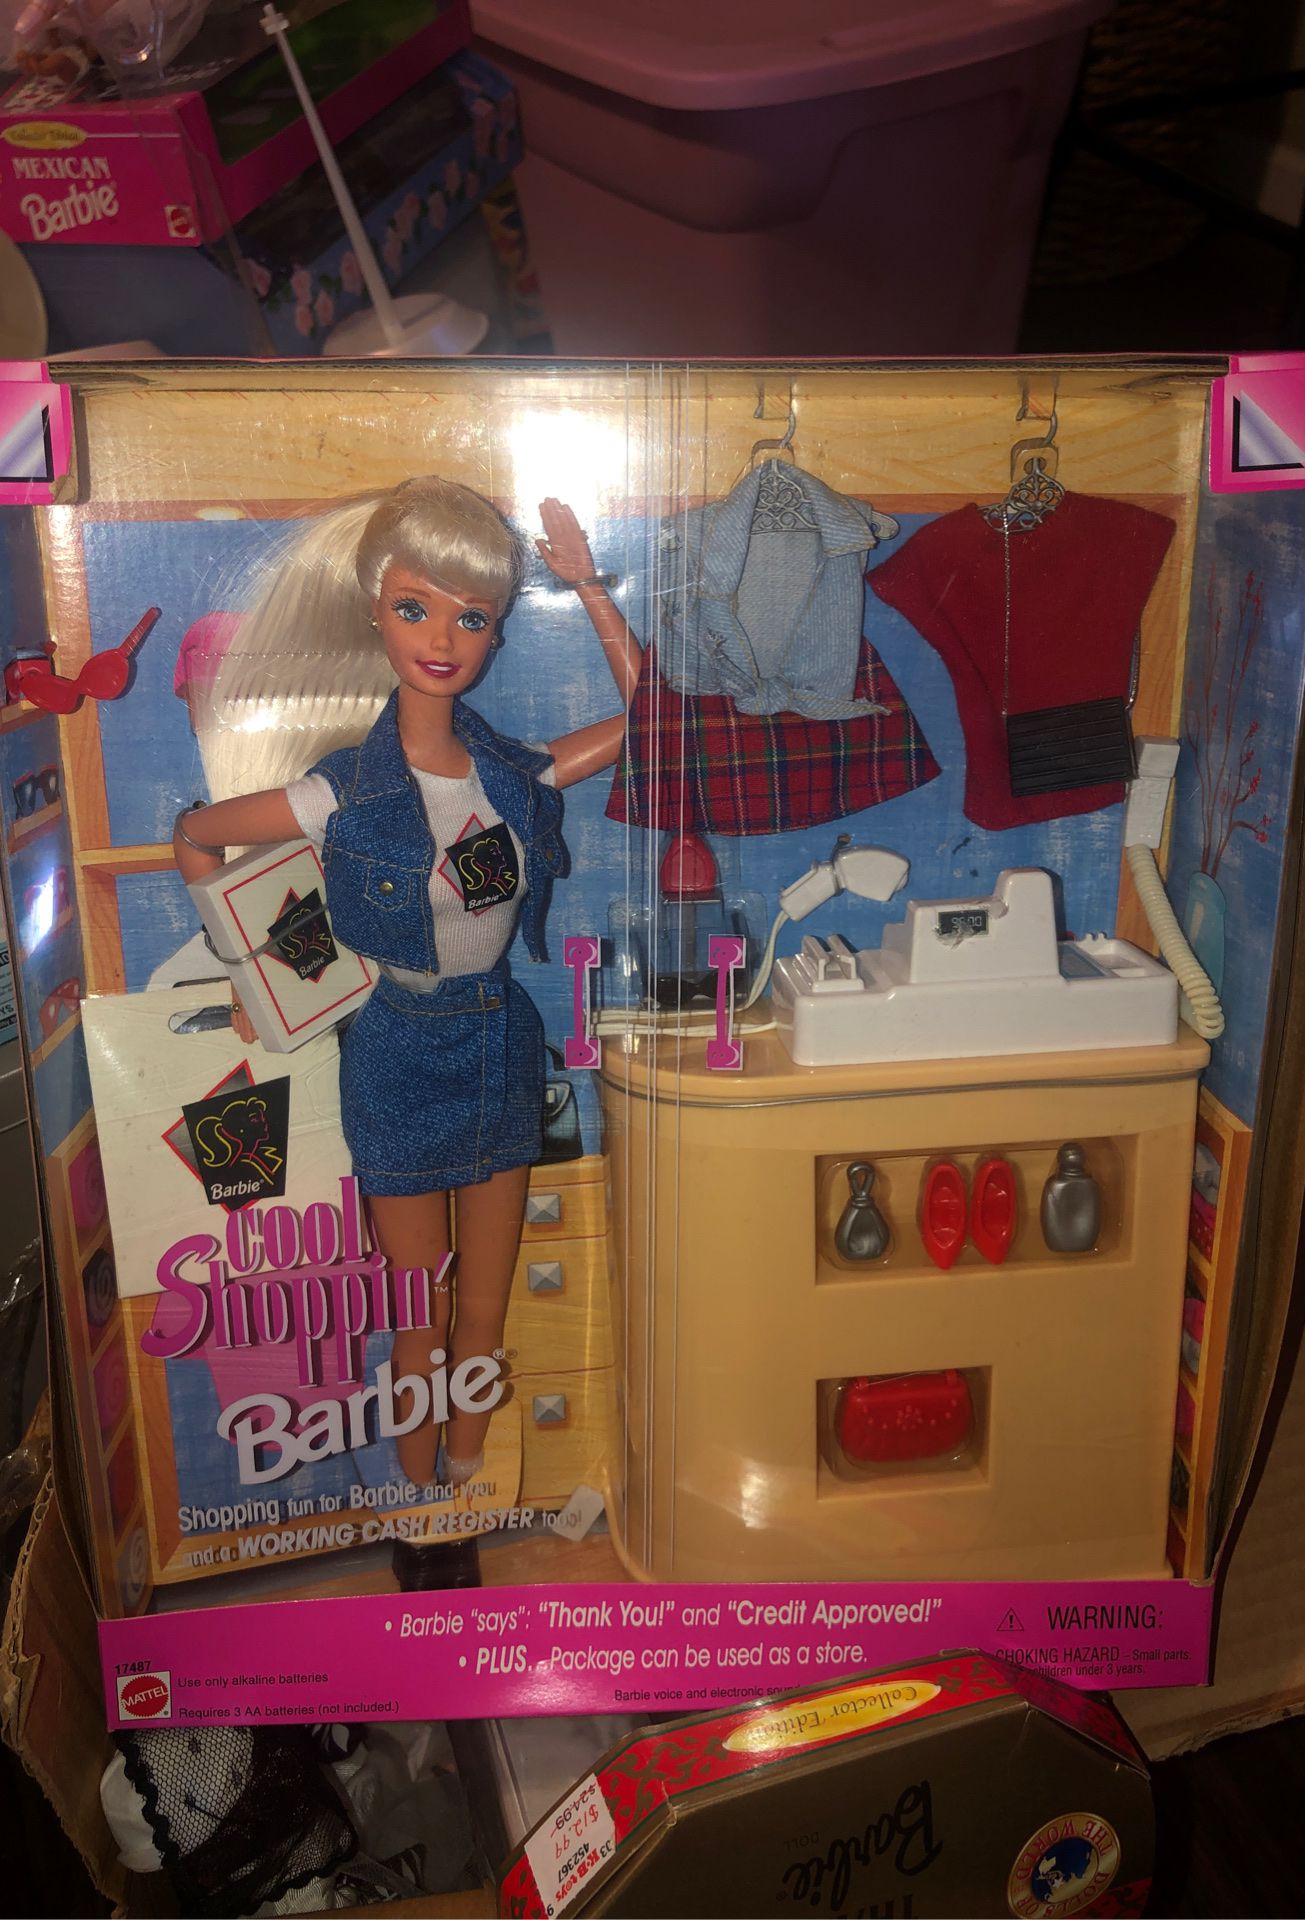 Cool Shoppin Barbie 1997